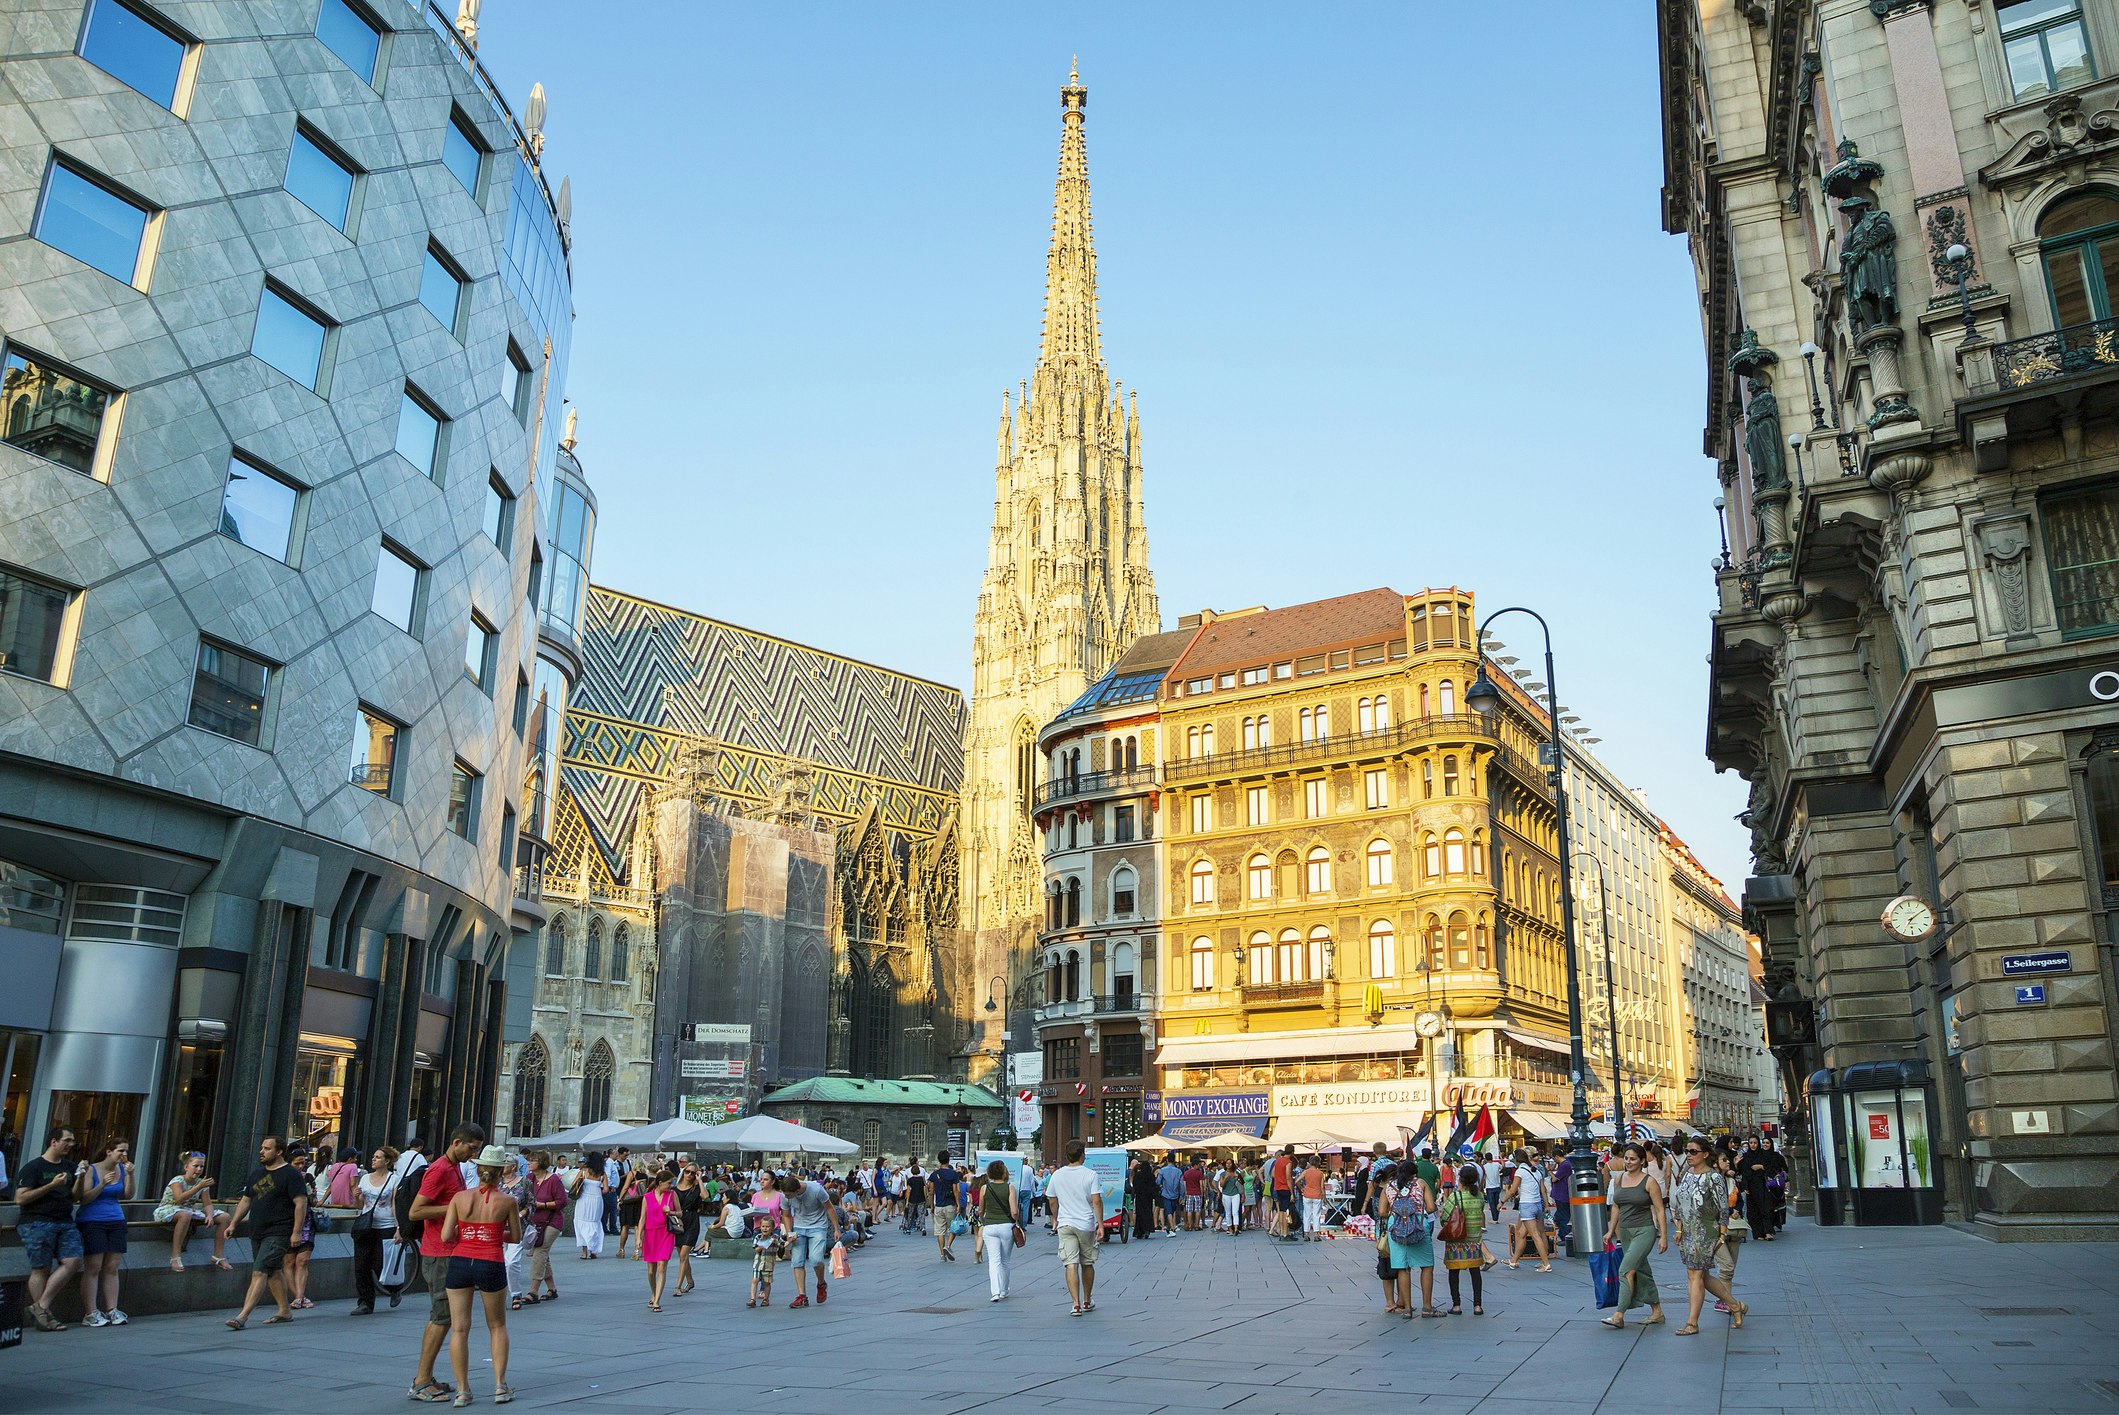 Vienna, The Stephansplatz (market square)